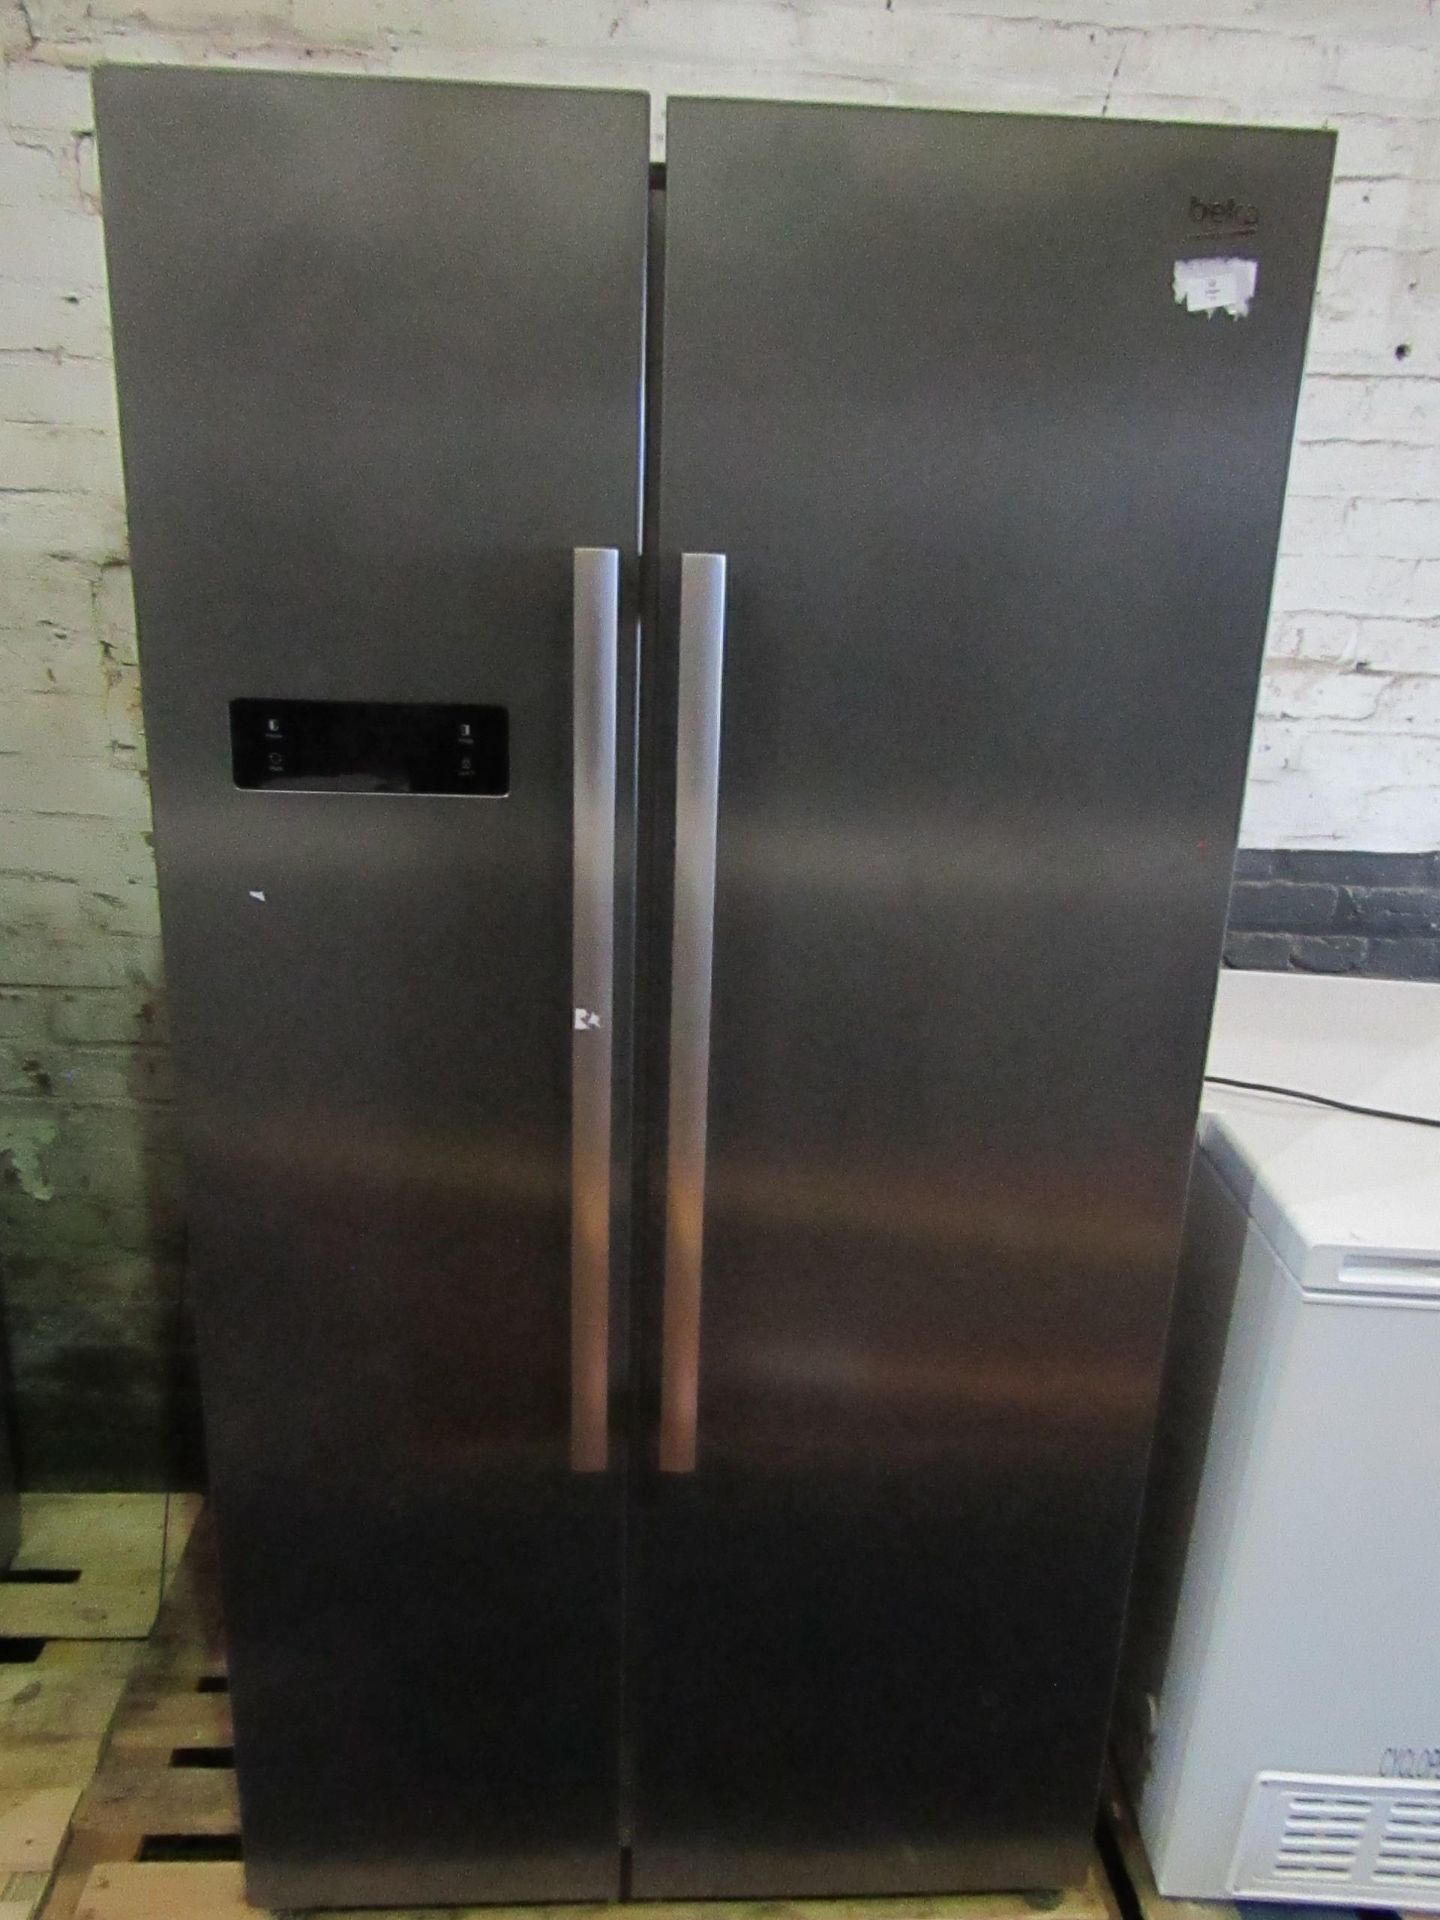 Beko American style fridge freezer, tested working